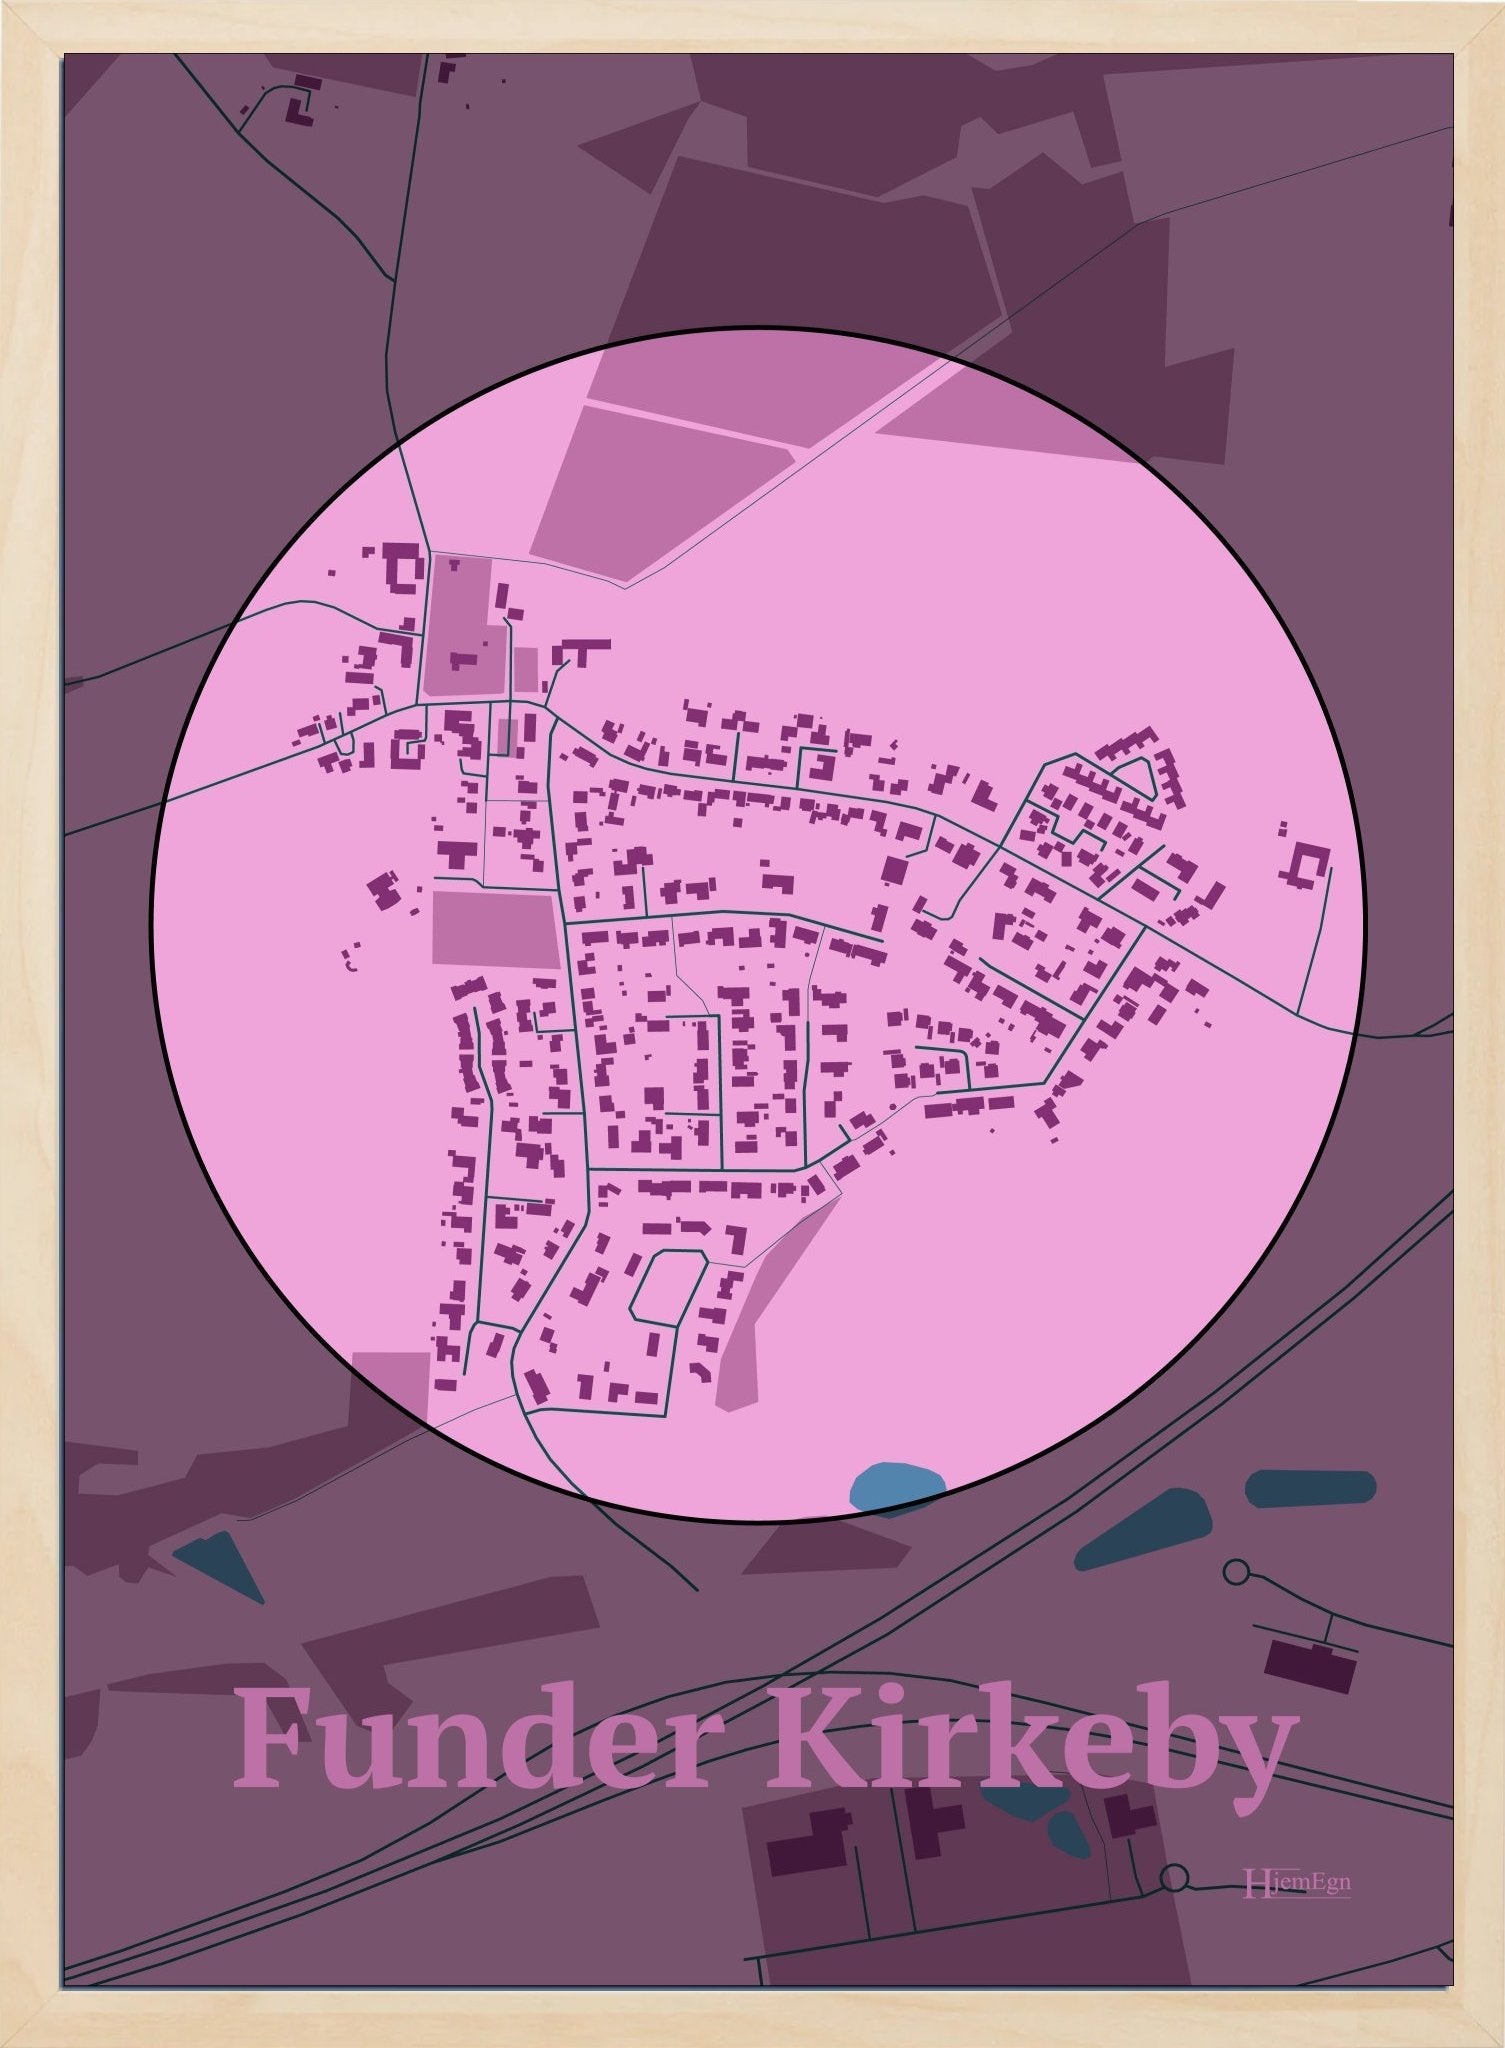 Funder Kirkeby plakat i farve pastel rød og HjemEgn.dk design centrum. Design bykort for Funder Kirkeby